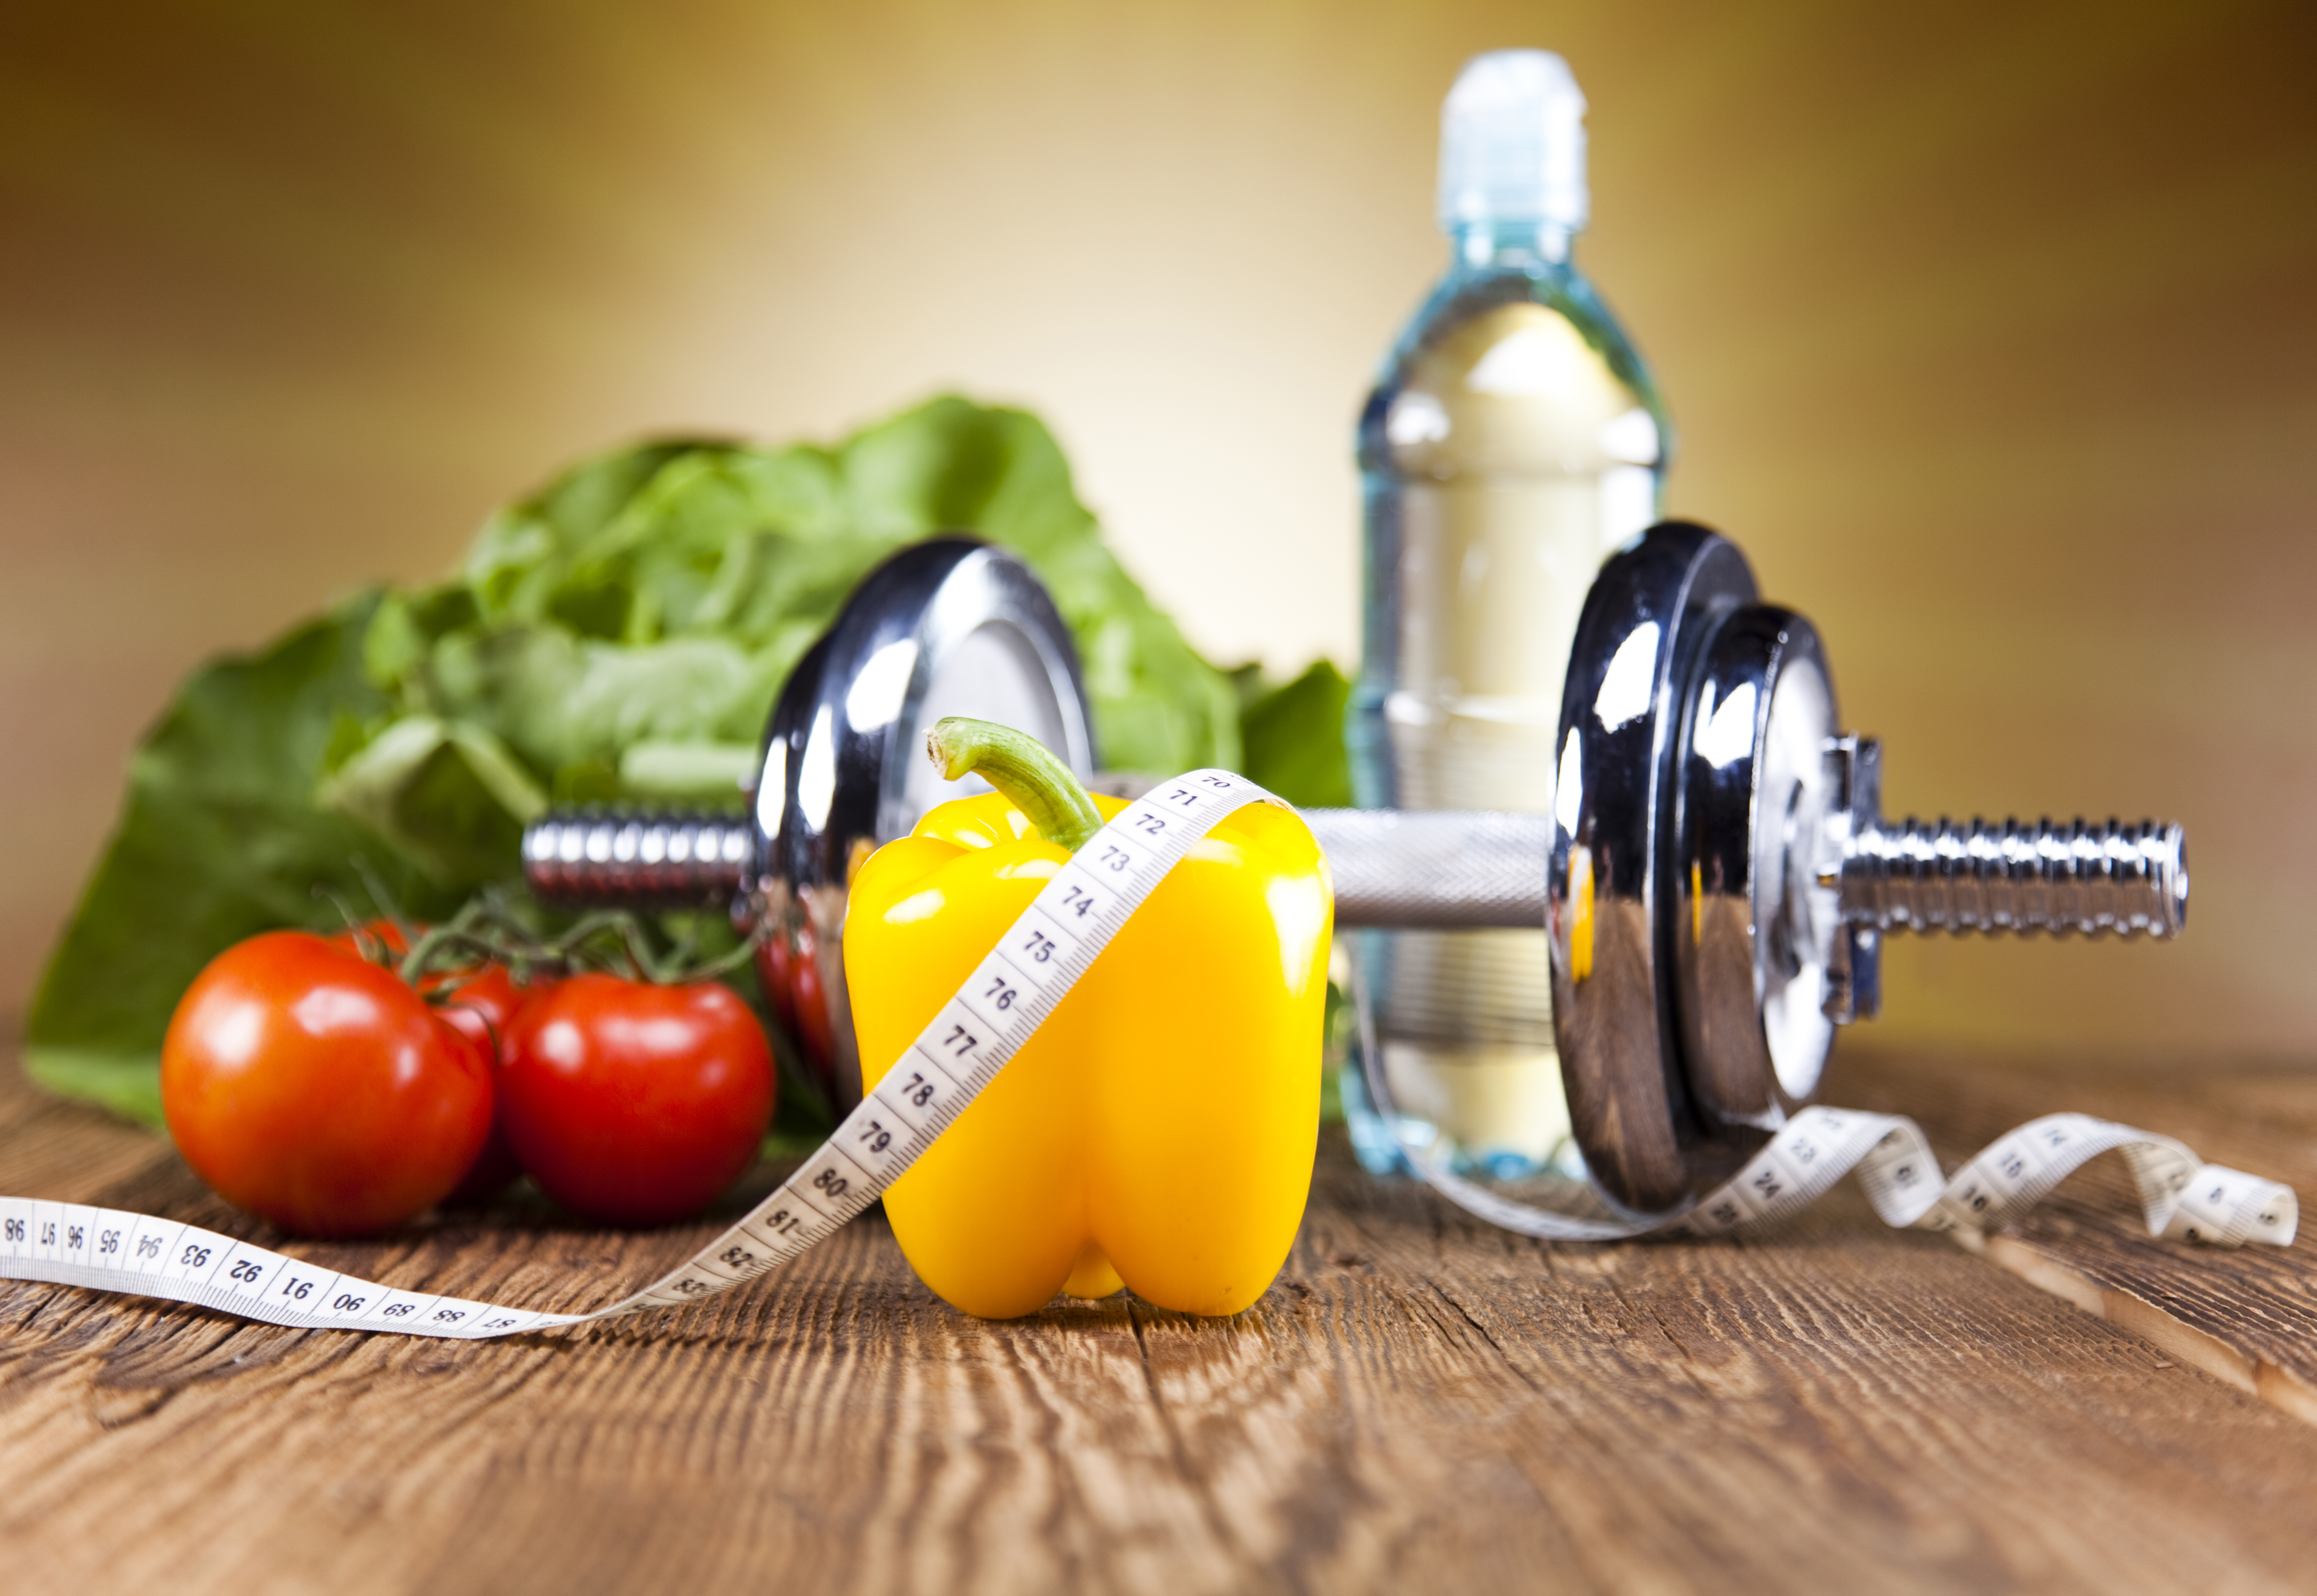 Exercise, Lifestyle, Nutrition